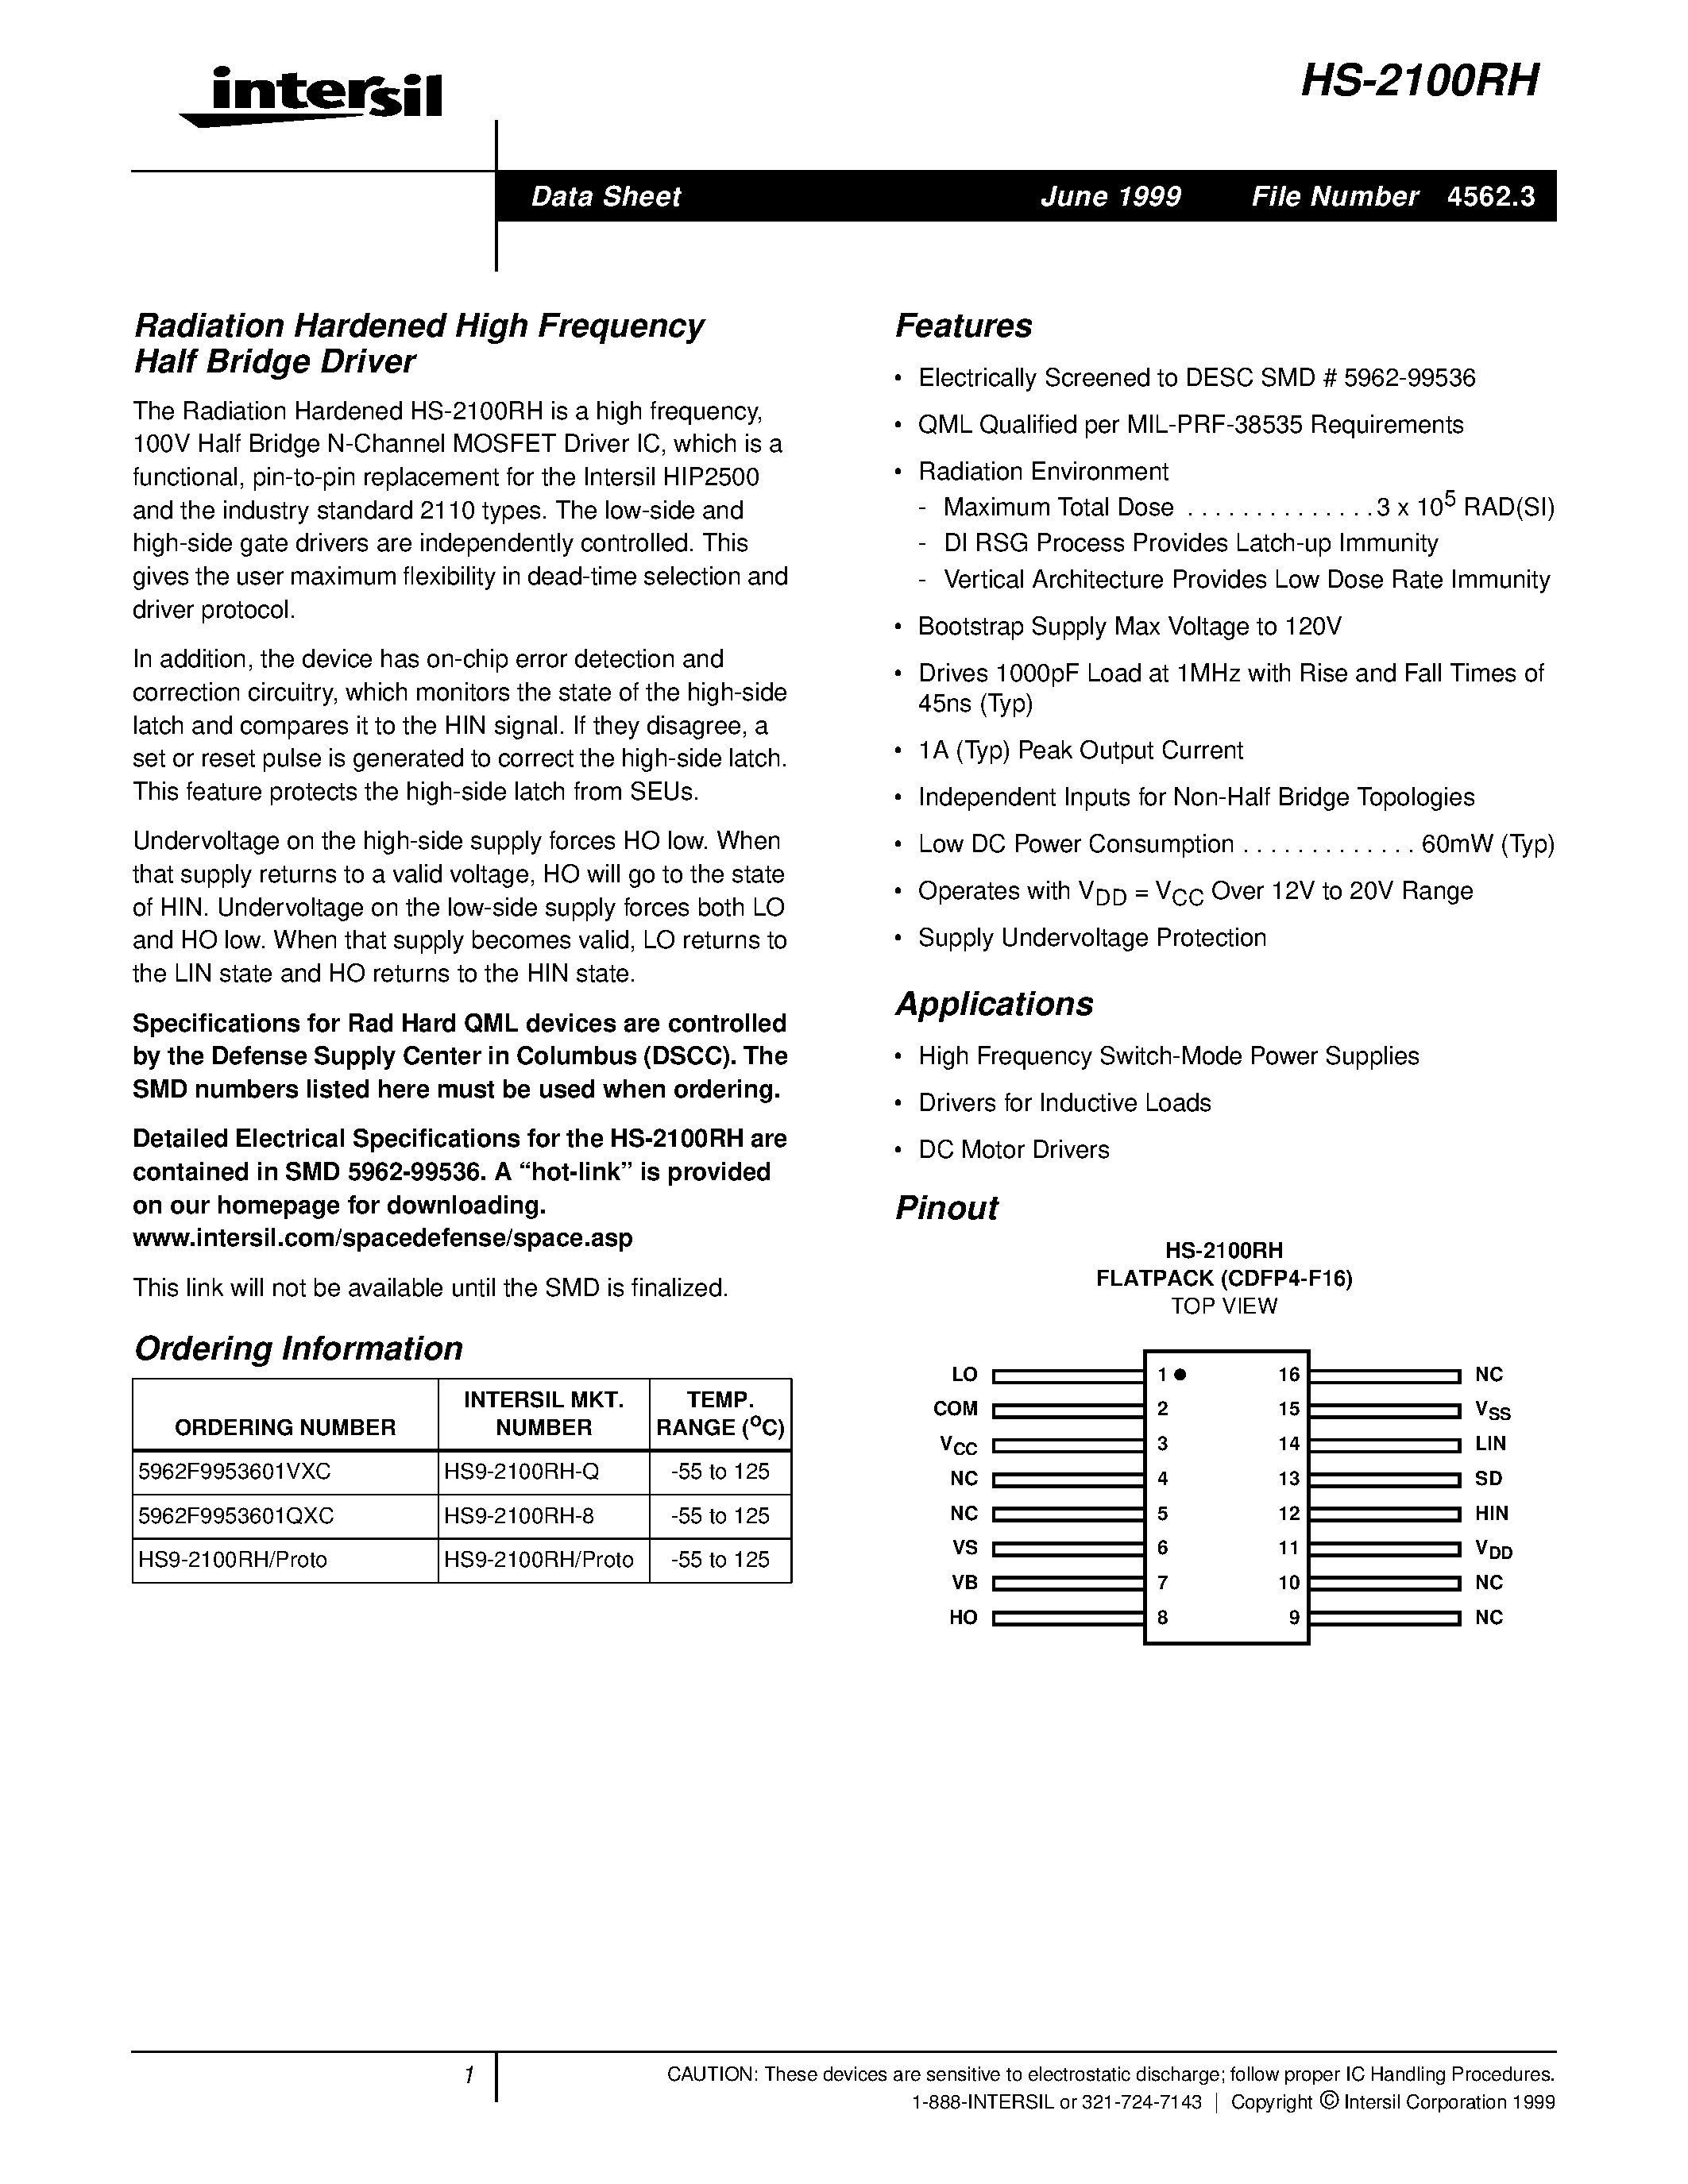 Datasheet HS9-2100RH-Q - Radiation Hardened High Frequency Half Bridge Driver page 1